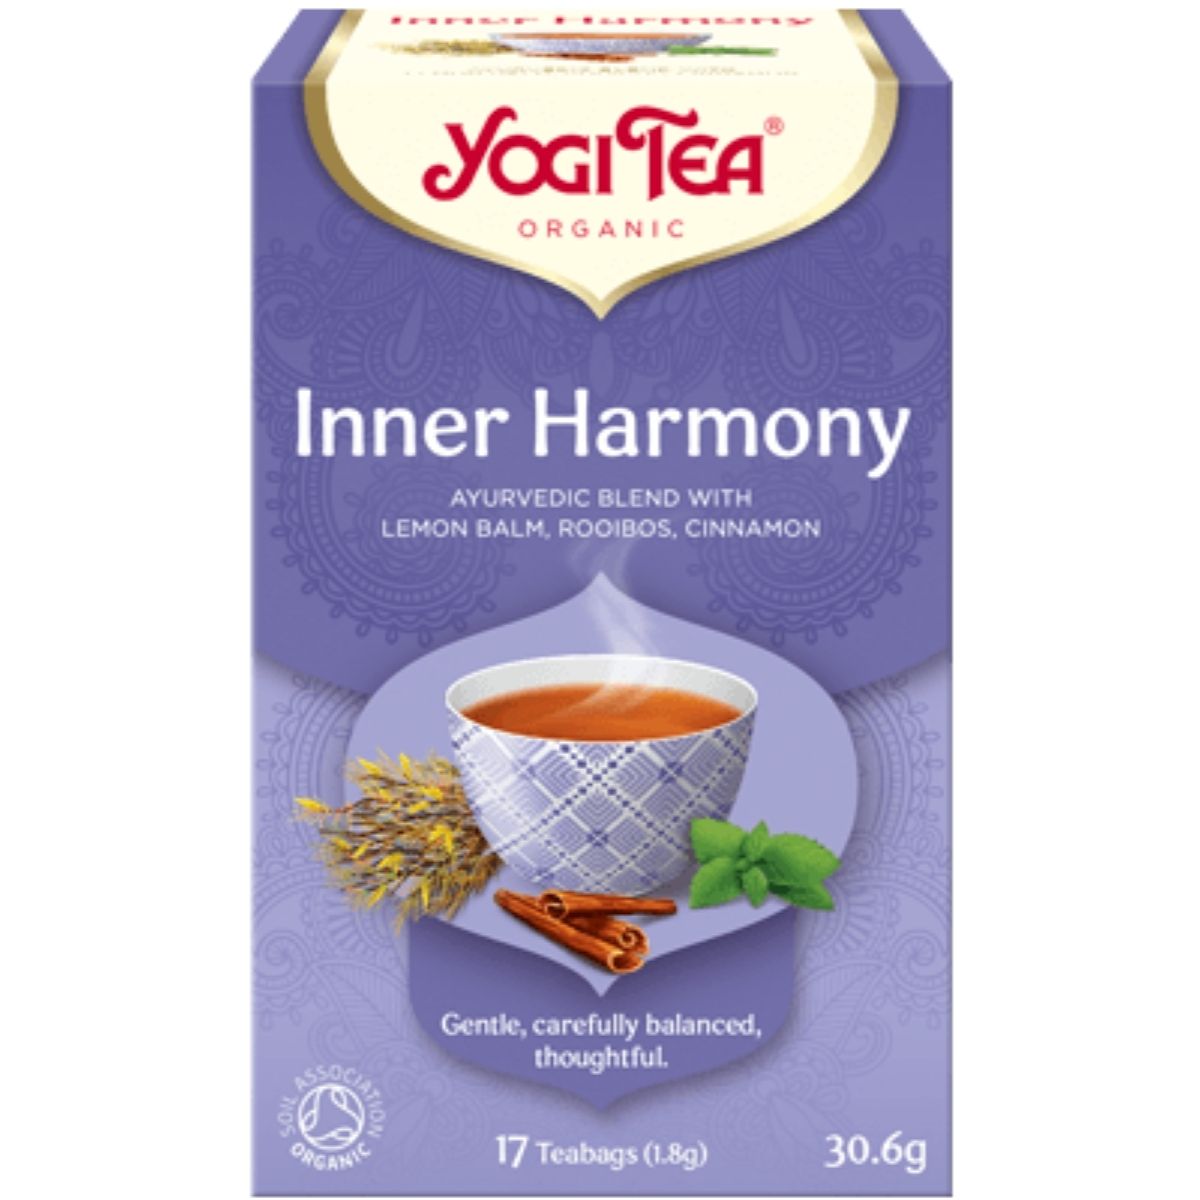 Yogi Tea Inner Harmony Tea 17 Bags - 30.6g